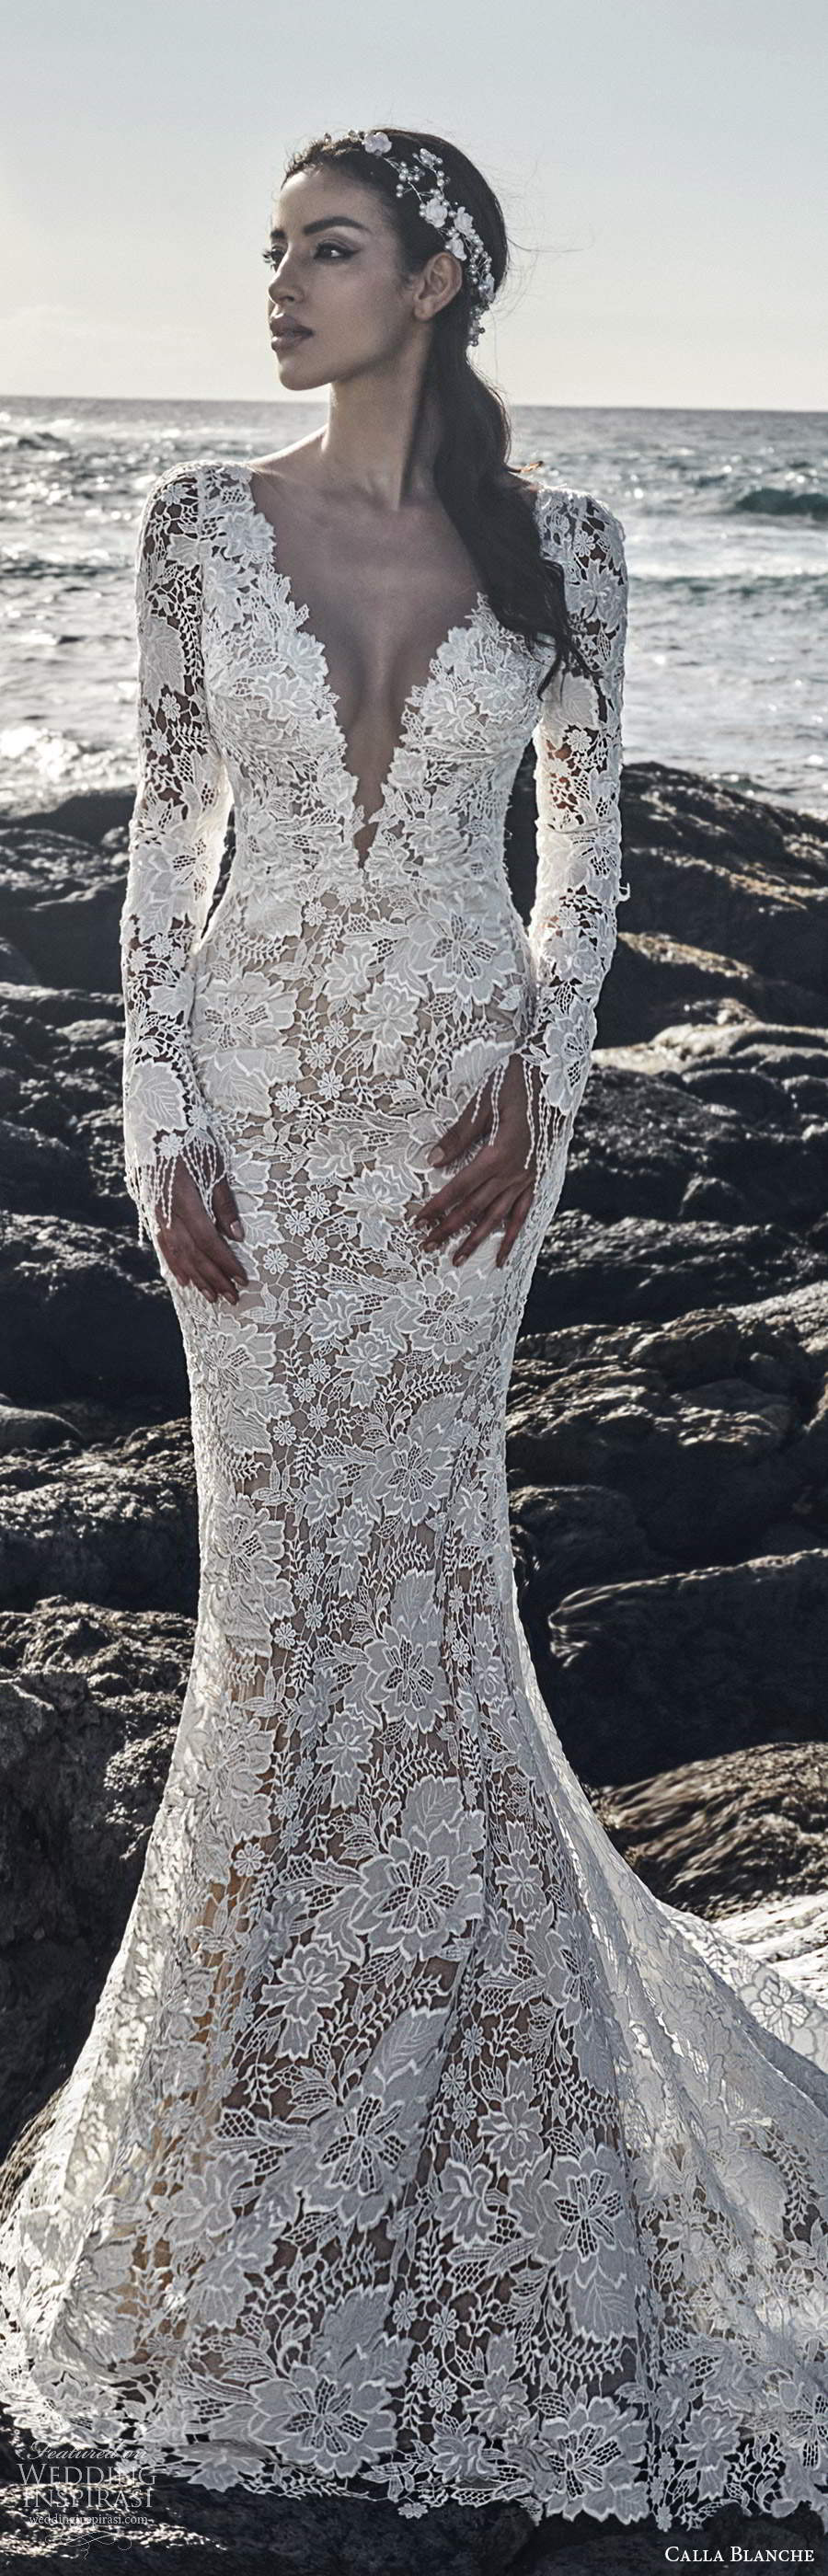 calla blanche fall 2020 bridal long sleeves plunging v neckline fully embellished lace sheath mermaid wedding dress chapel train (3) lv